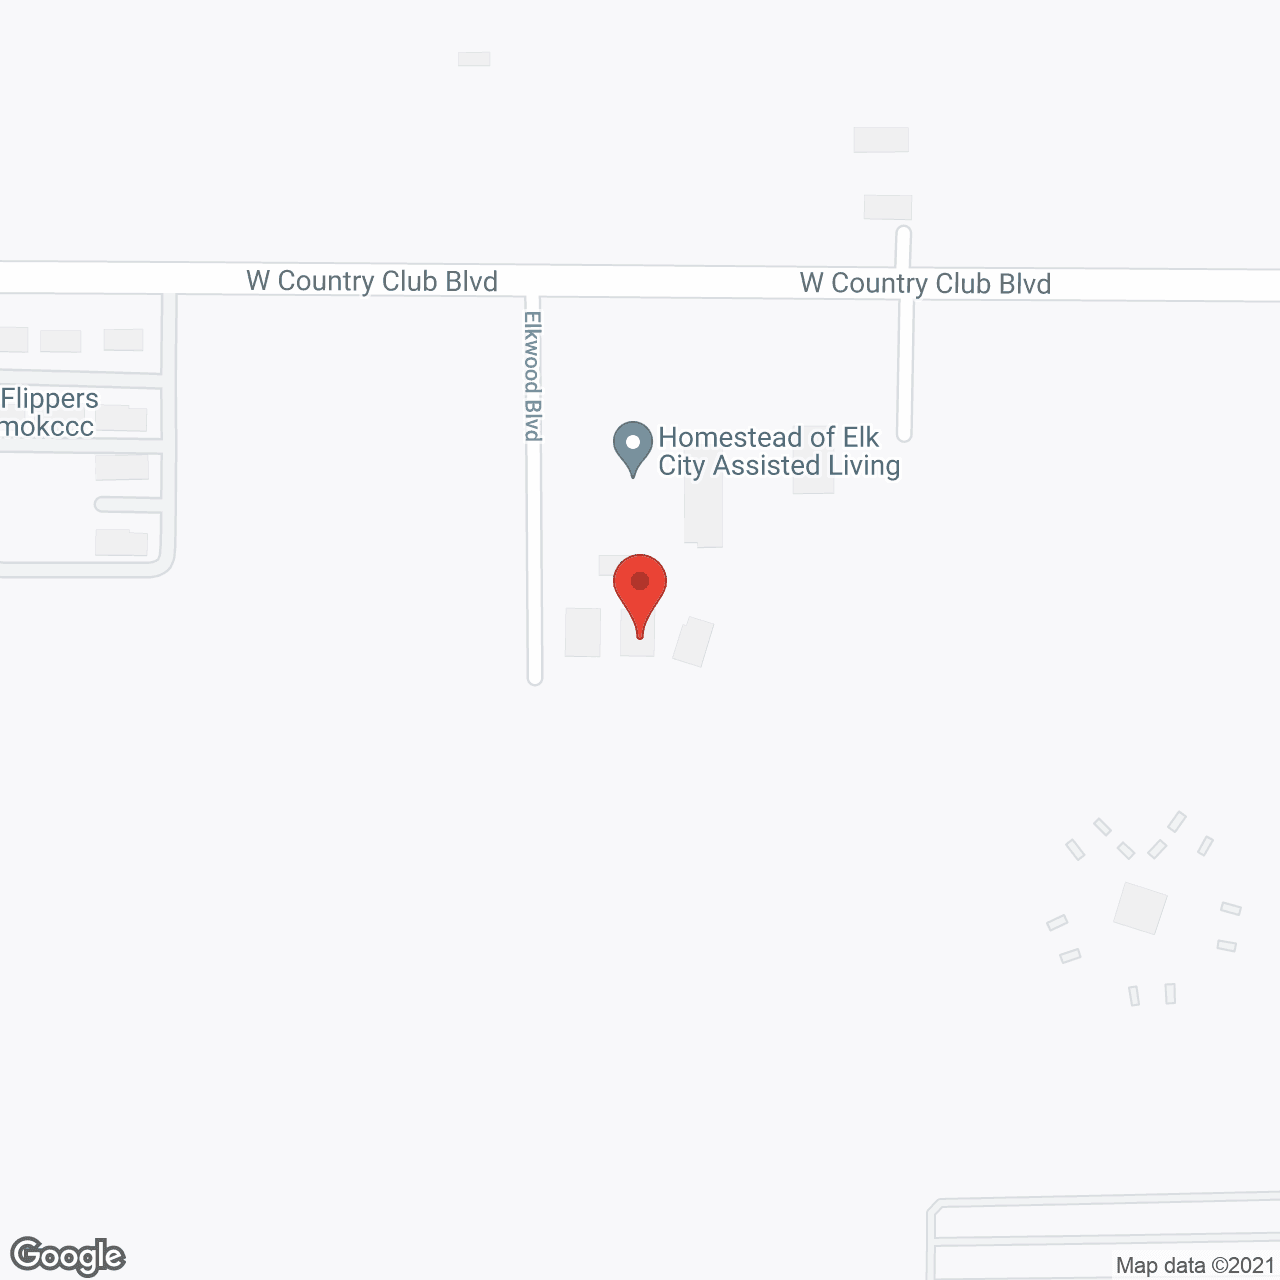 Homestead of Elk City in google map